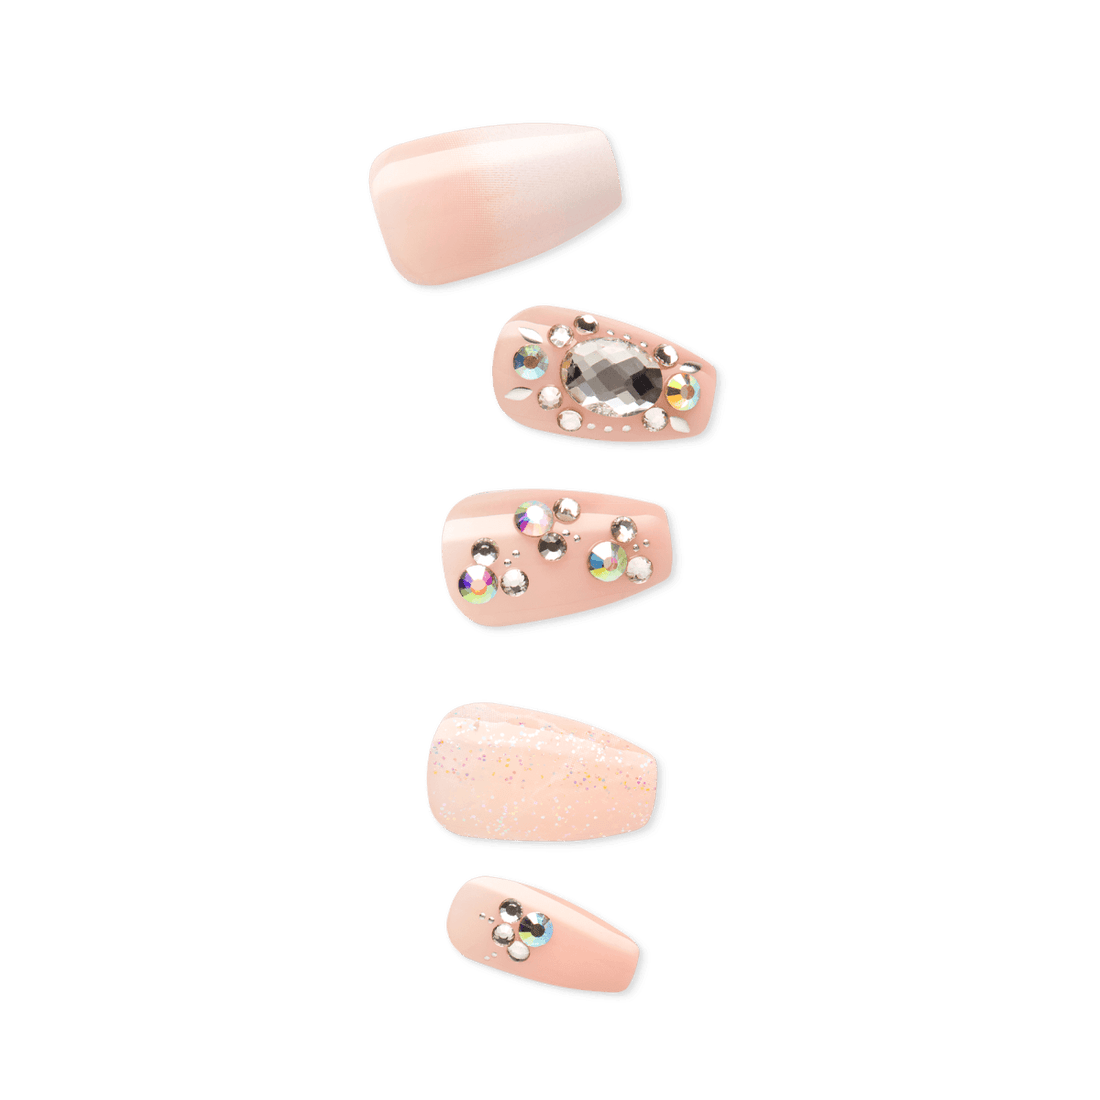 imPRESS Press-on Manicure Birthstone Collection - Diamond